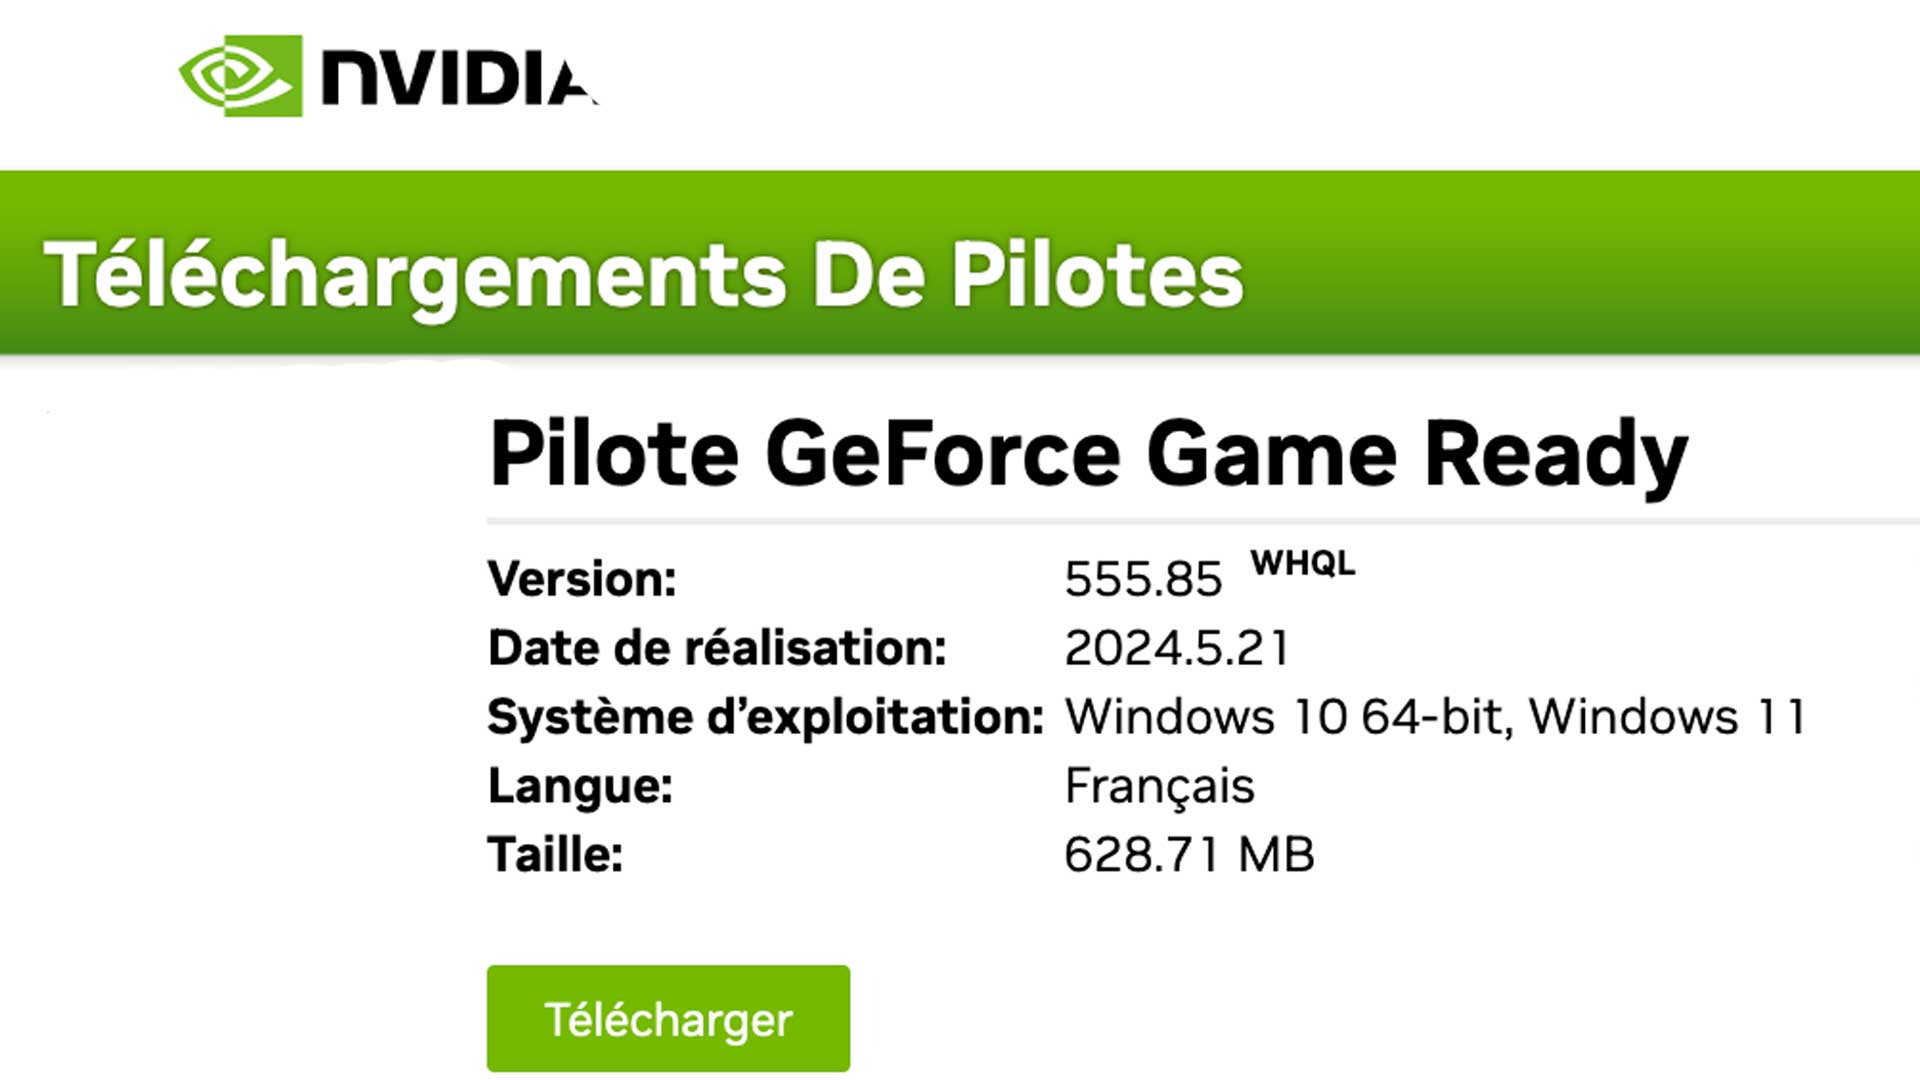 Pilotes graphiques GeForce 555.85 WHQL Game Ready de Nvidia